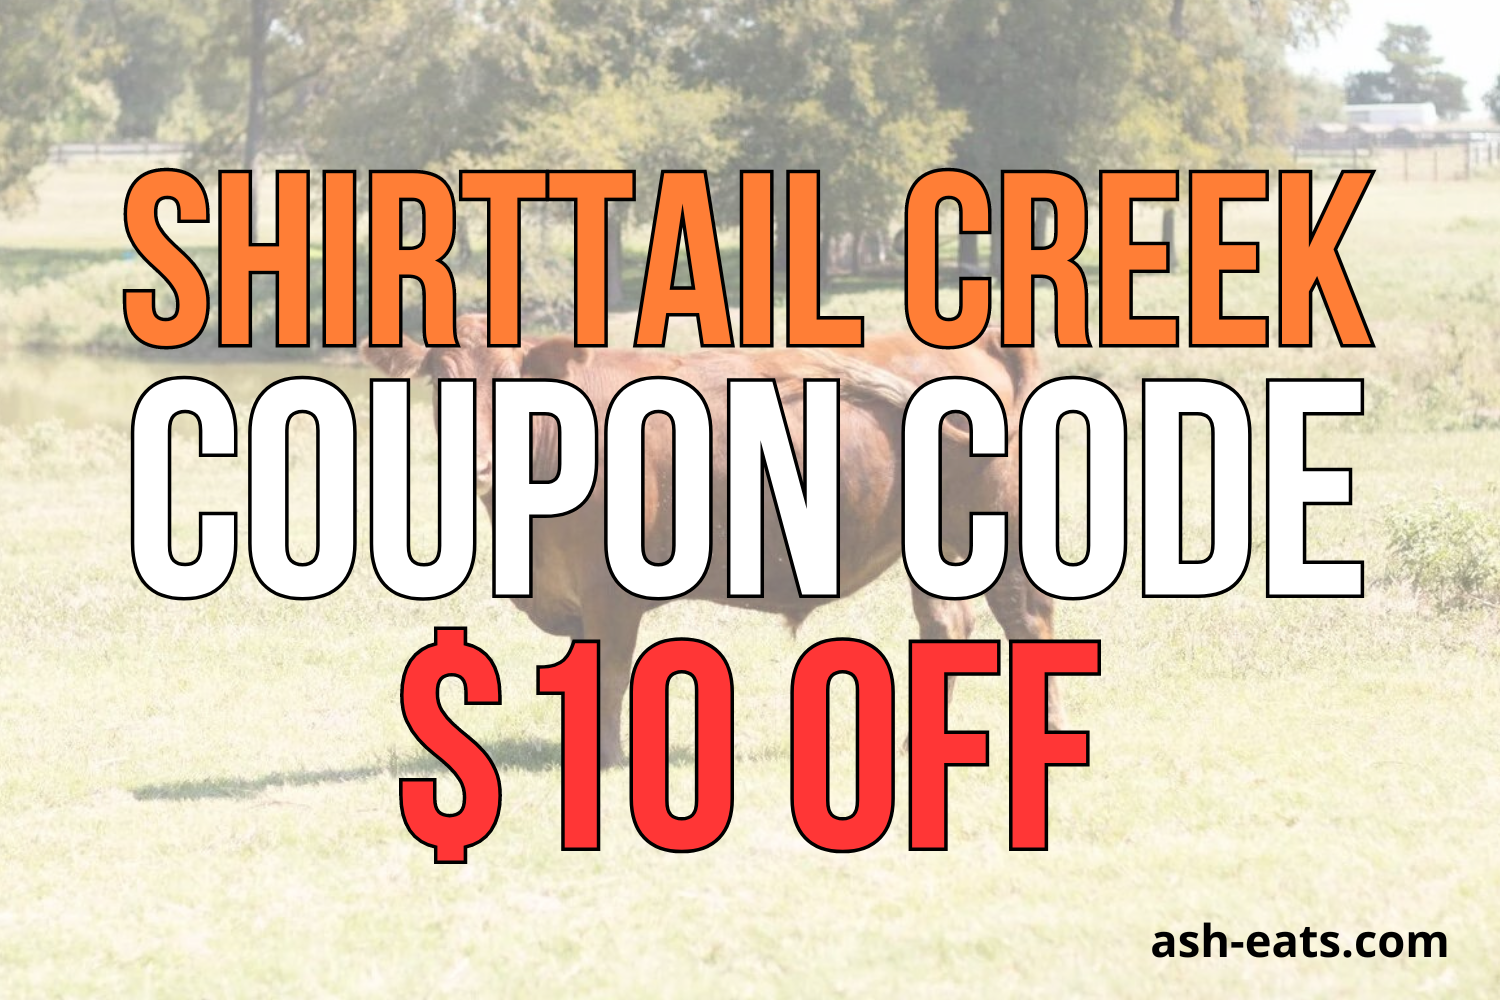 shirttail creek coupon code